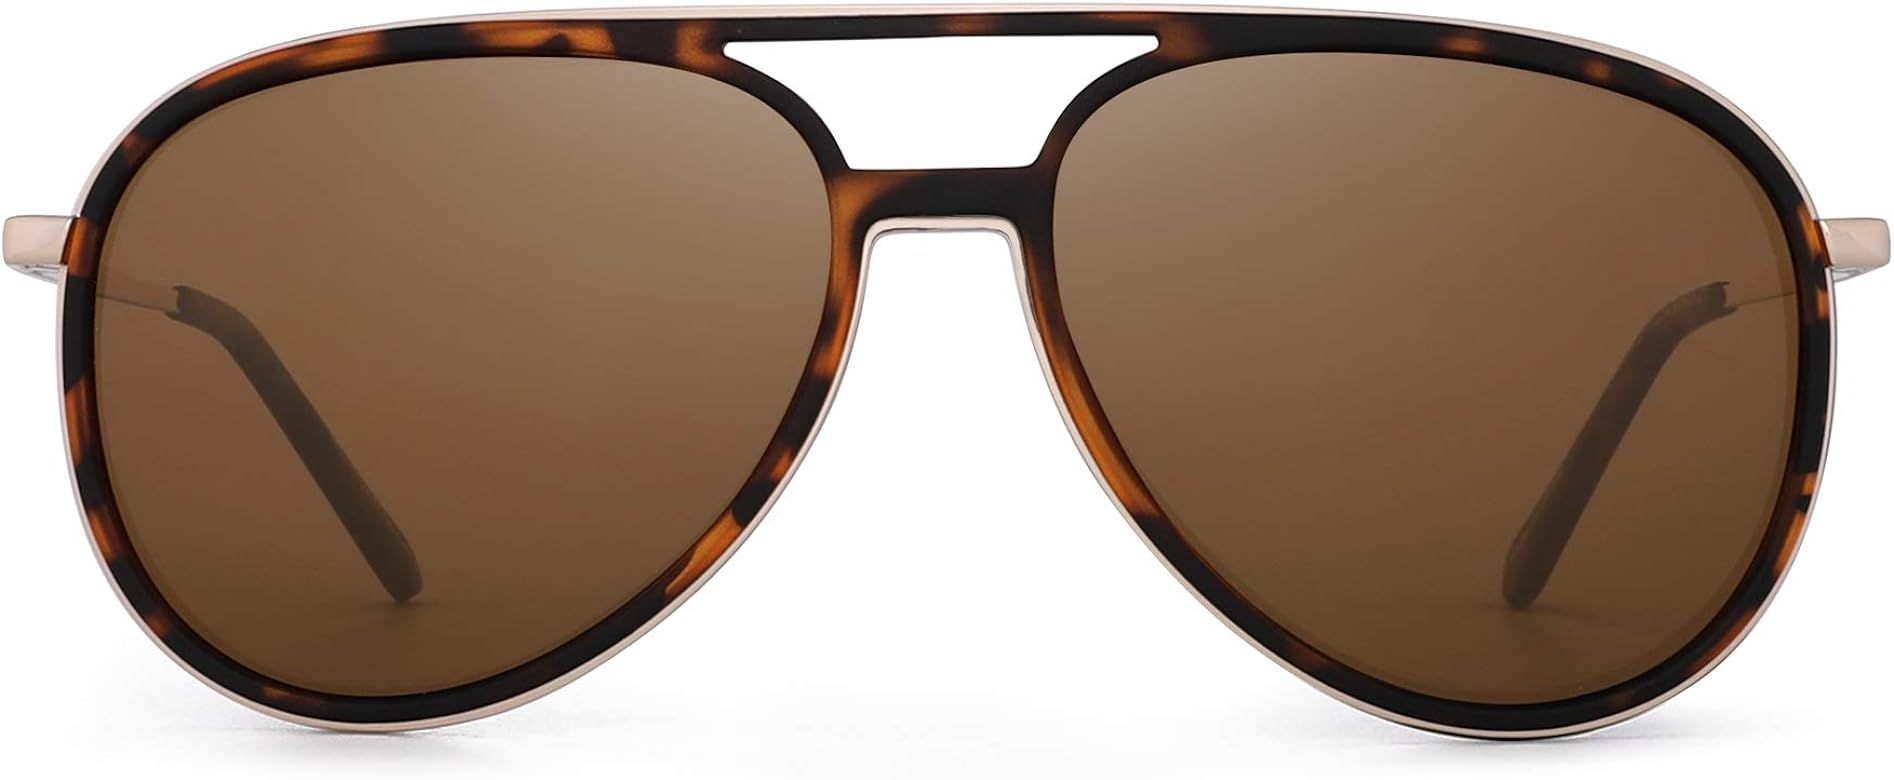 GLINDAR Retro Polarized Aviator Sunglasses Men Women Lightweight Plastic Driving Glasses | Amazon (US)